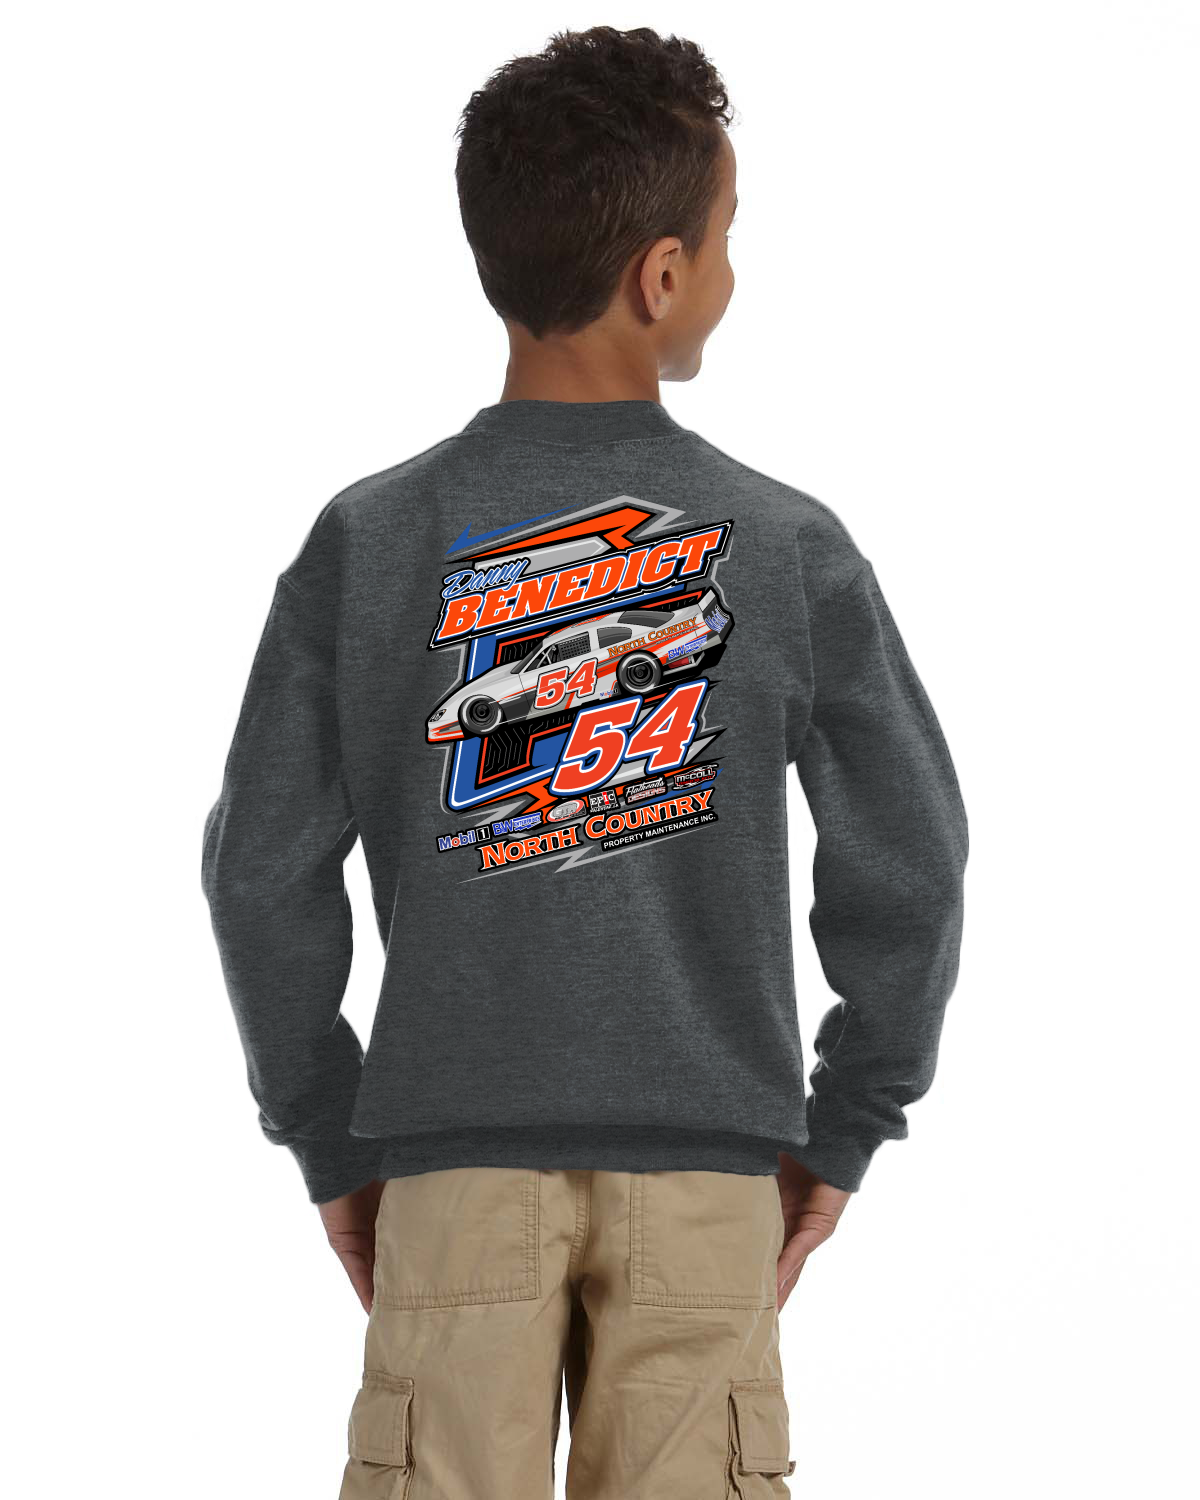 Danny Benedict Racing Youth Crew neck sweater